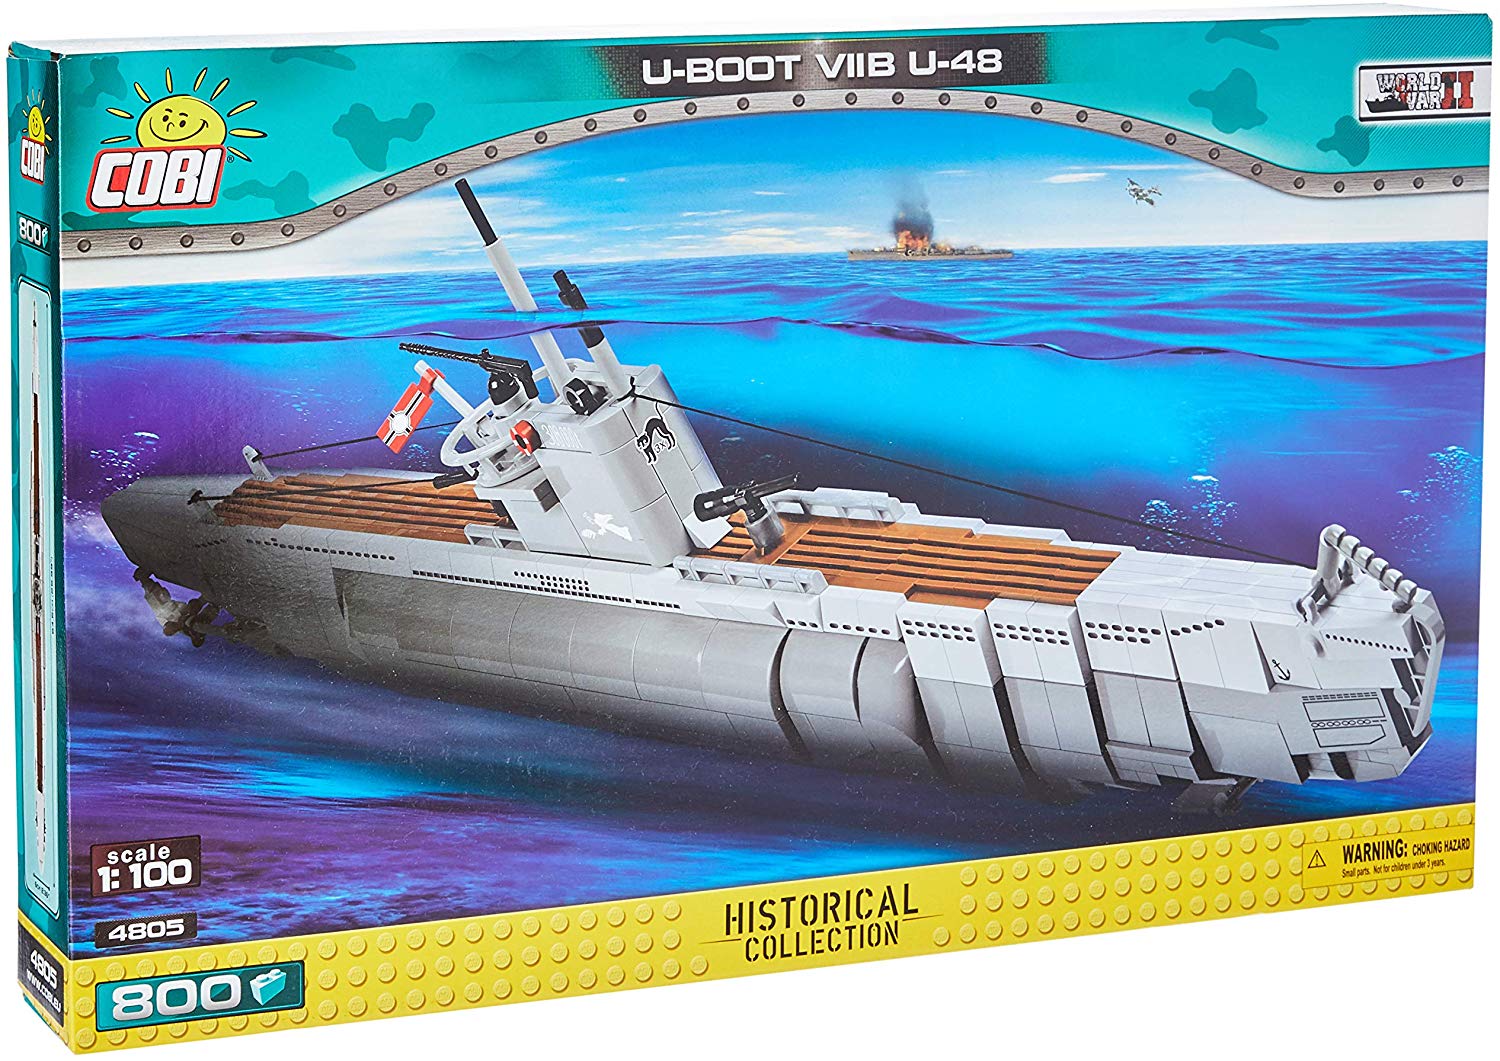 Cobi 4805 Viib U-48 Model Submarine Construction Toy – Grey / Brown